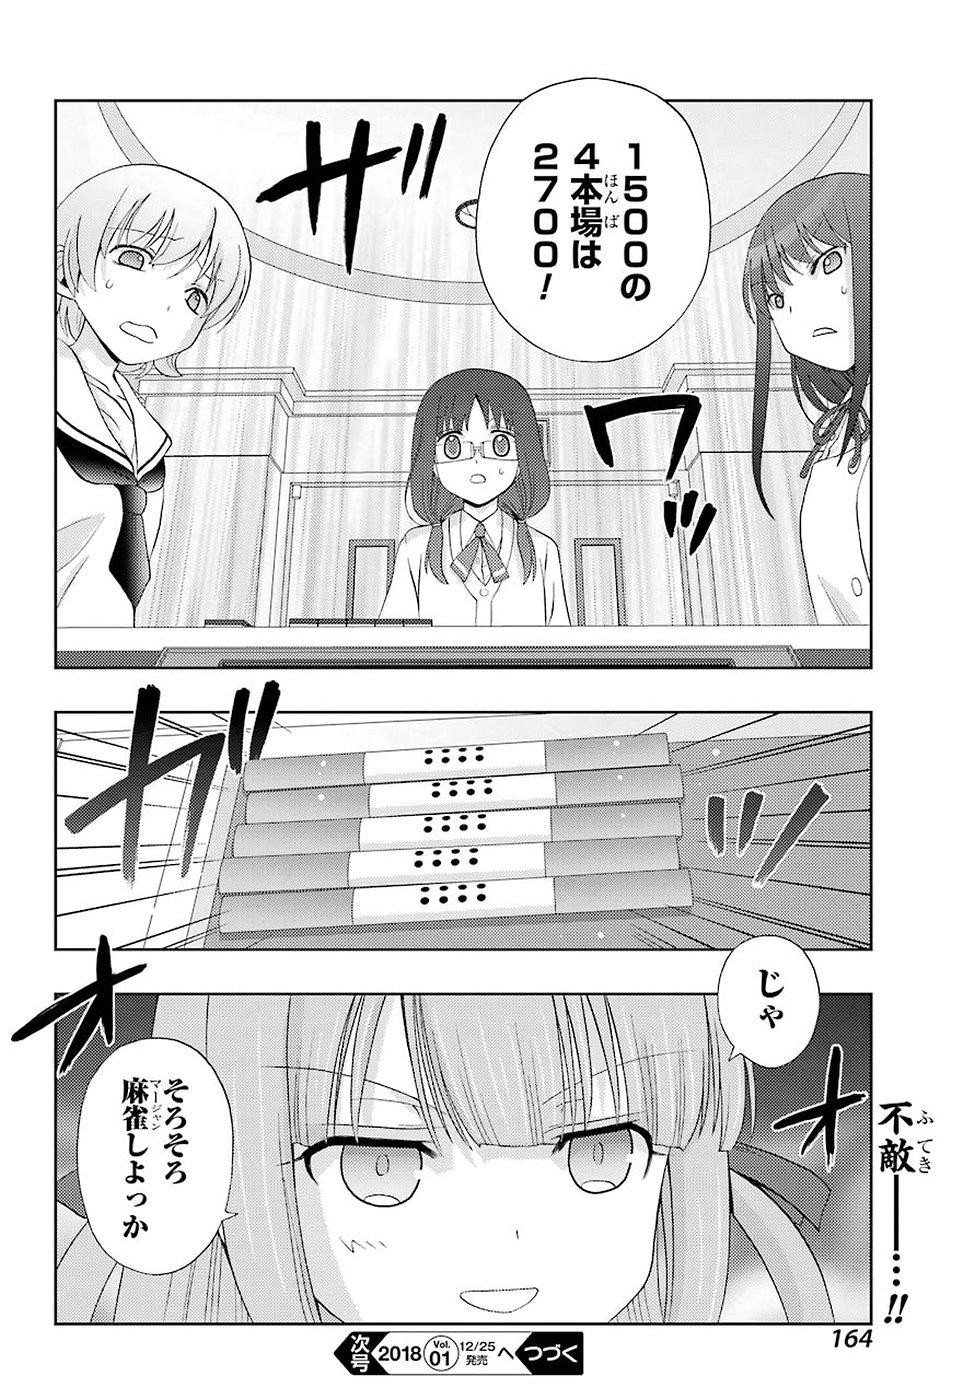 Shinohayu - The Dawn of Age Manga - Chapter 051 - Page 29